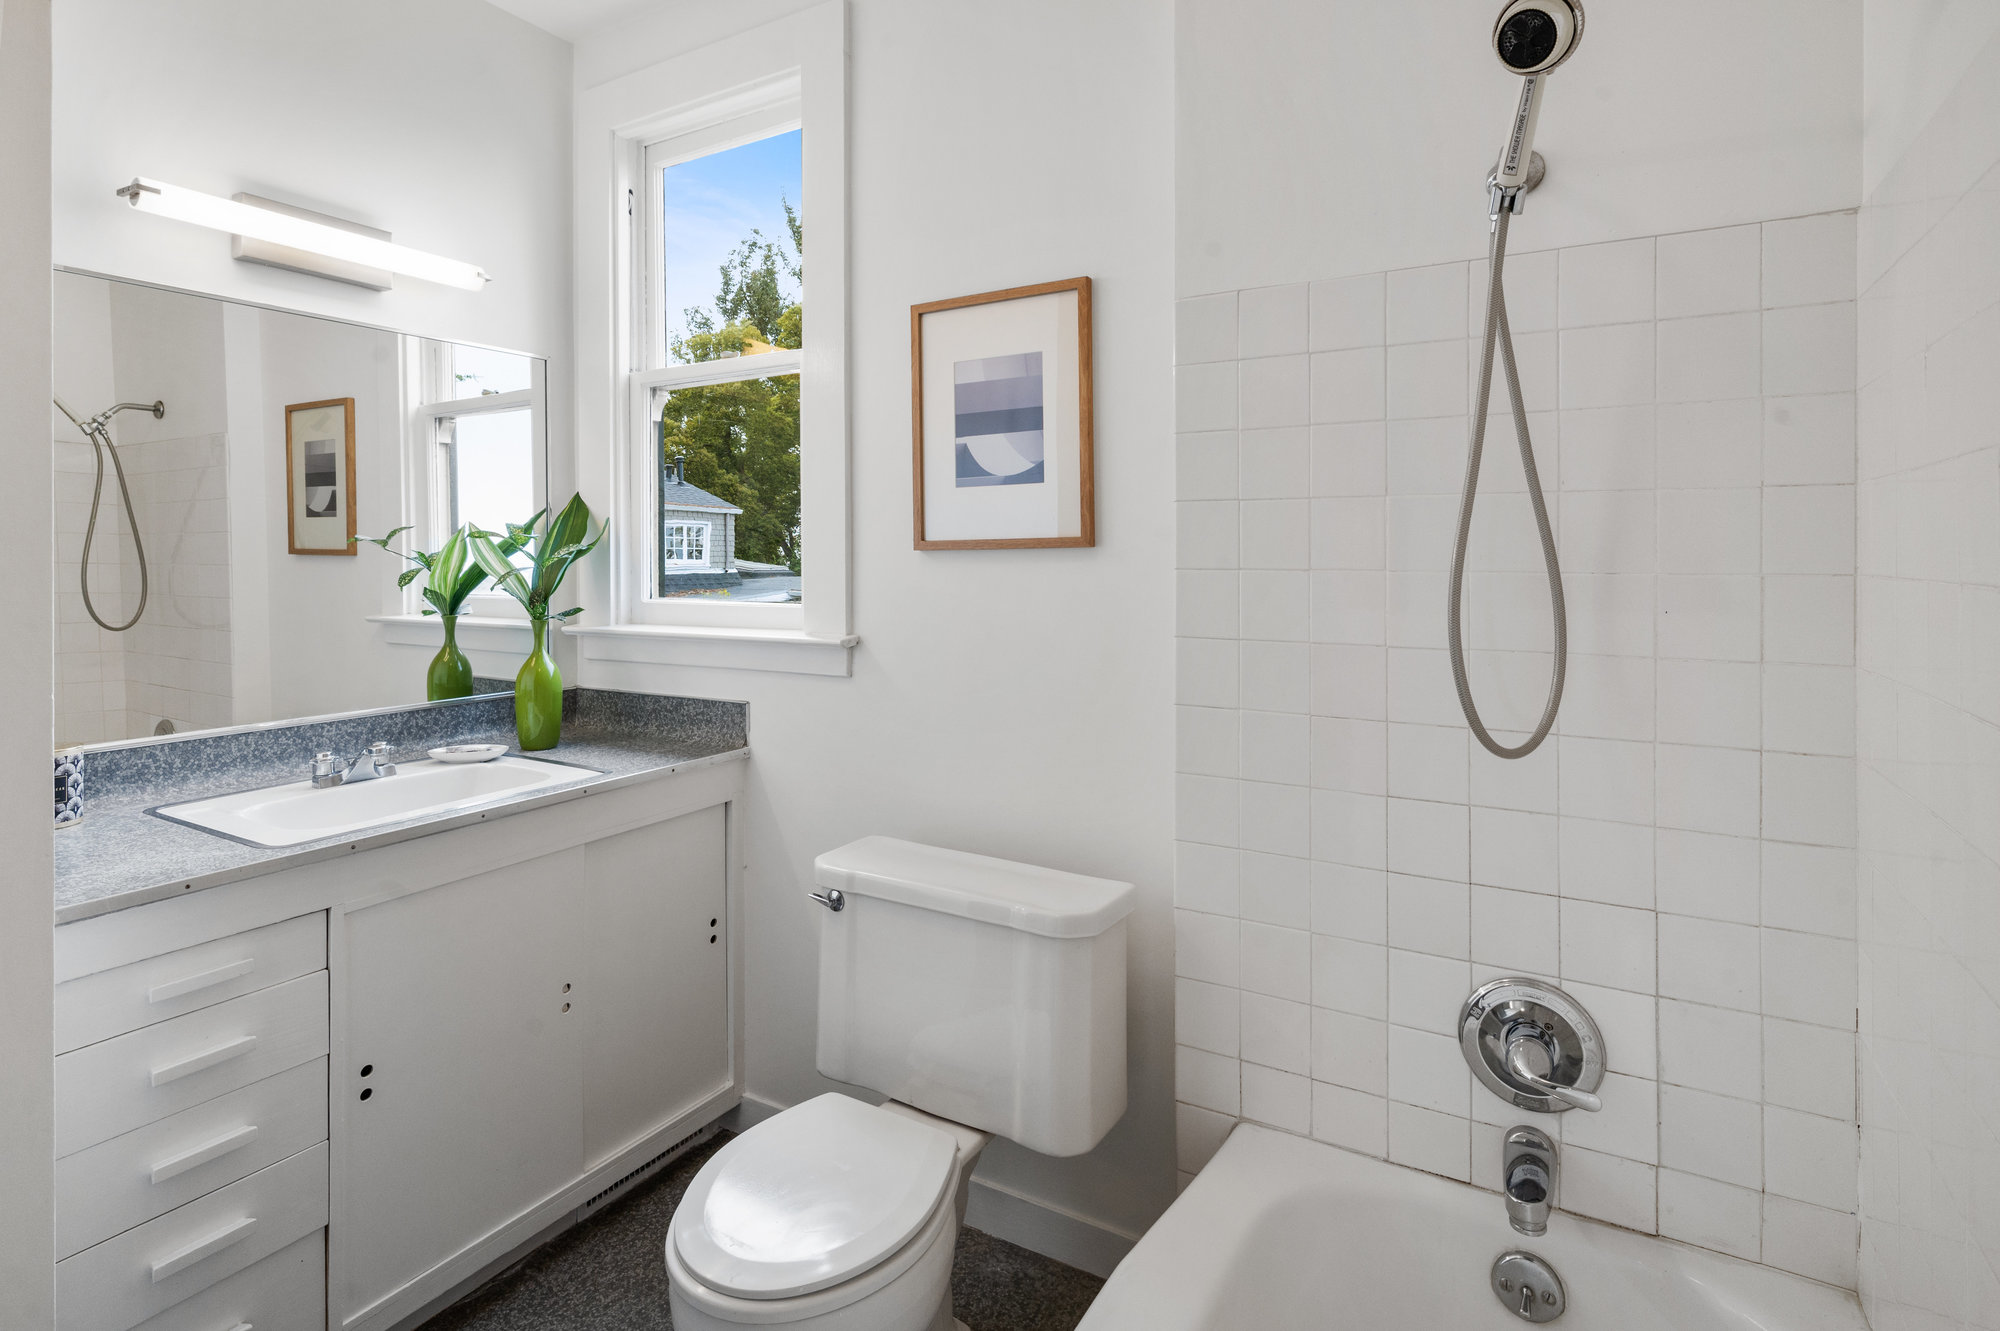 Property Photo: Bathroom with bath tub, a window, and vanity